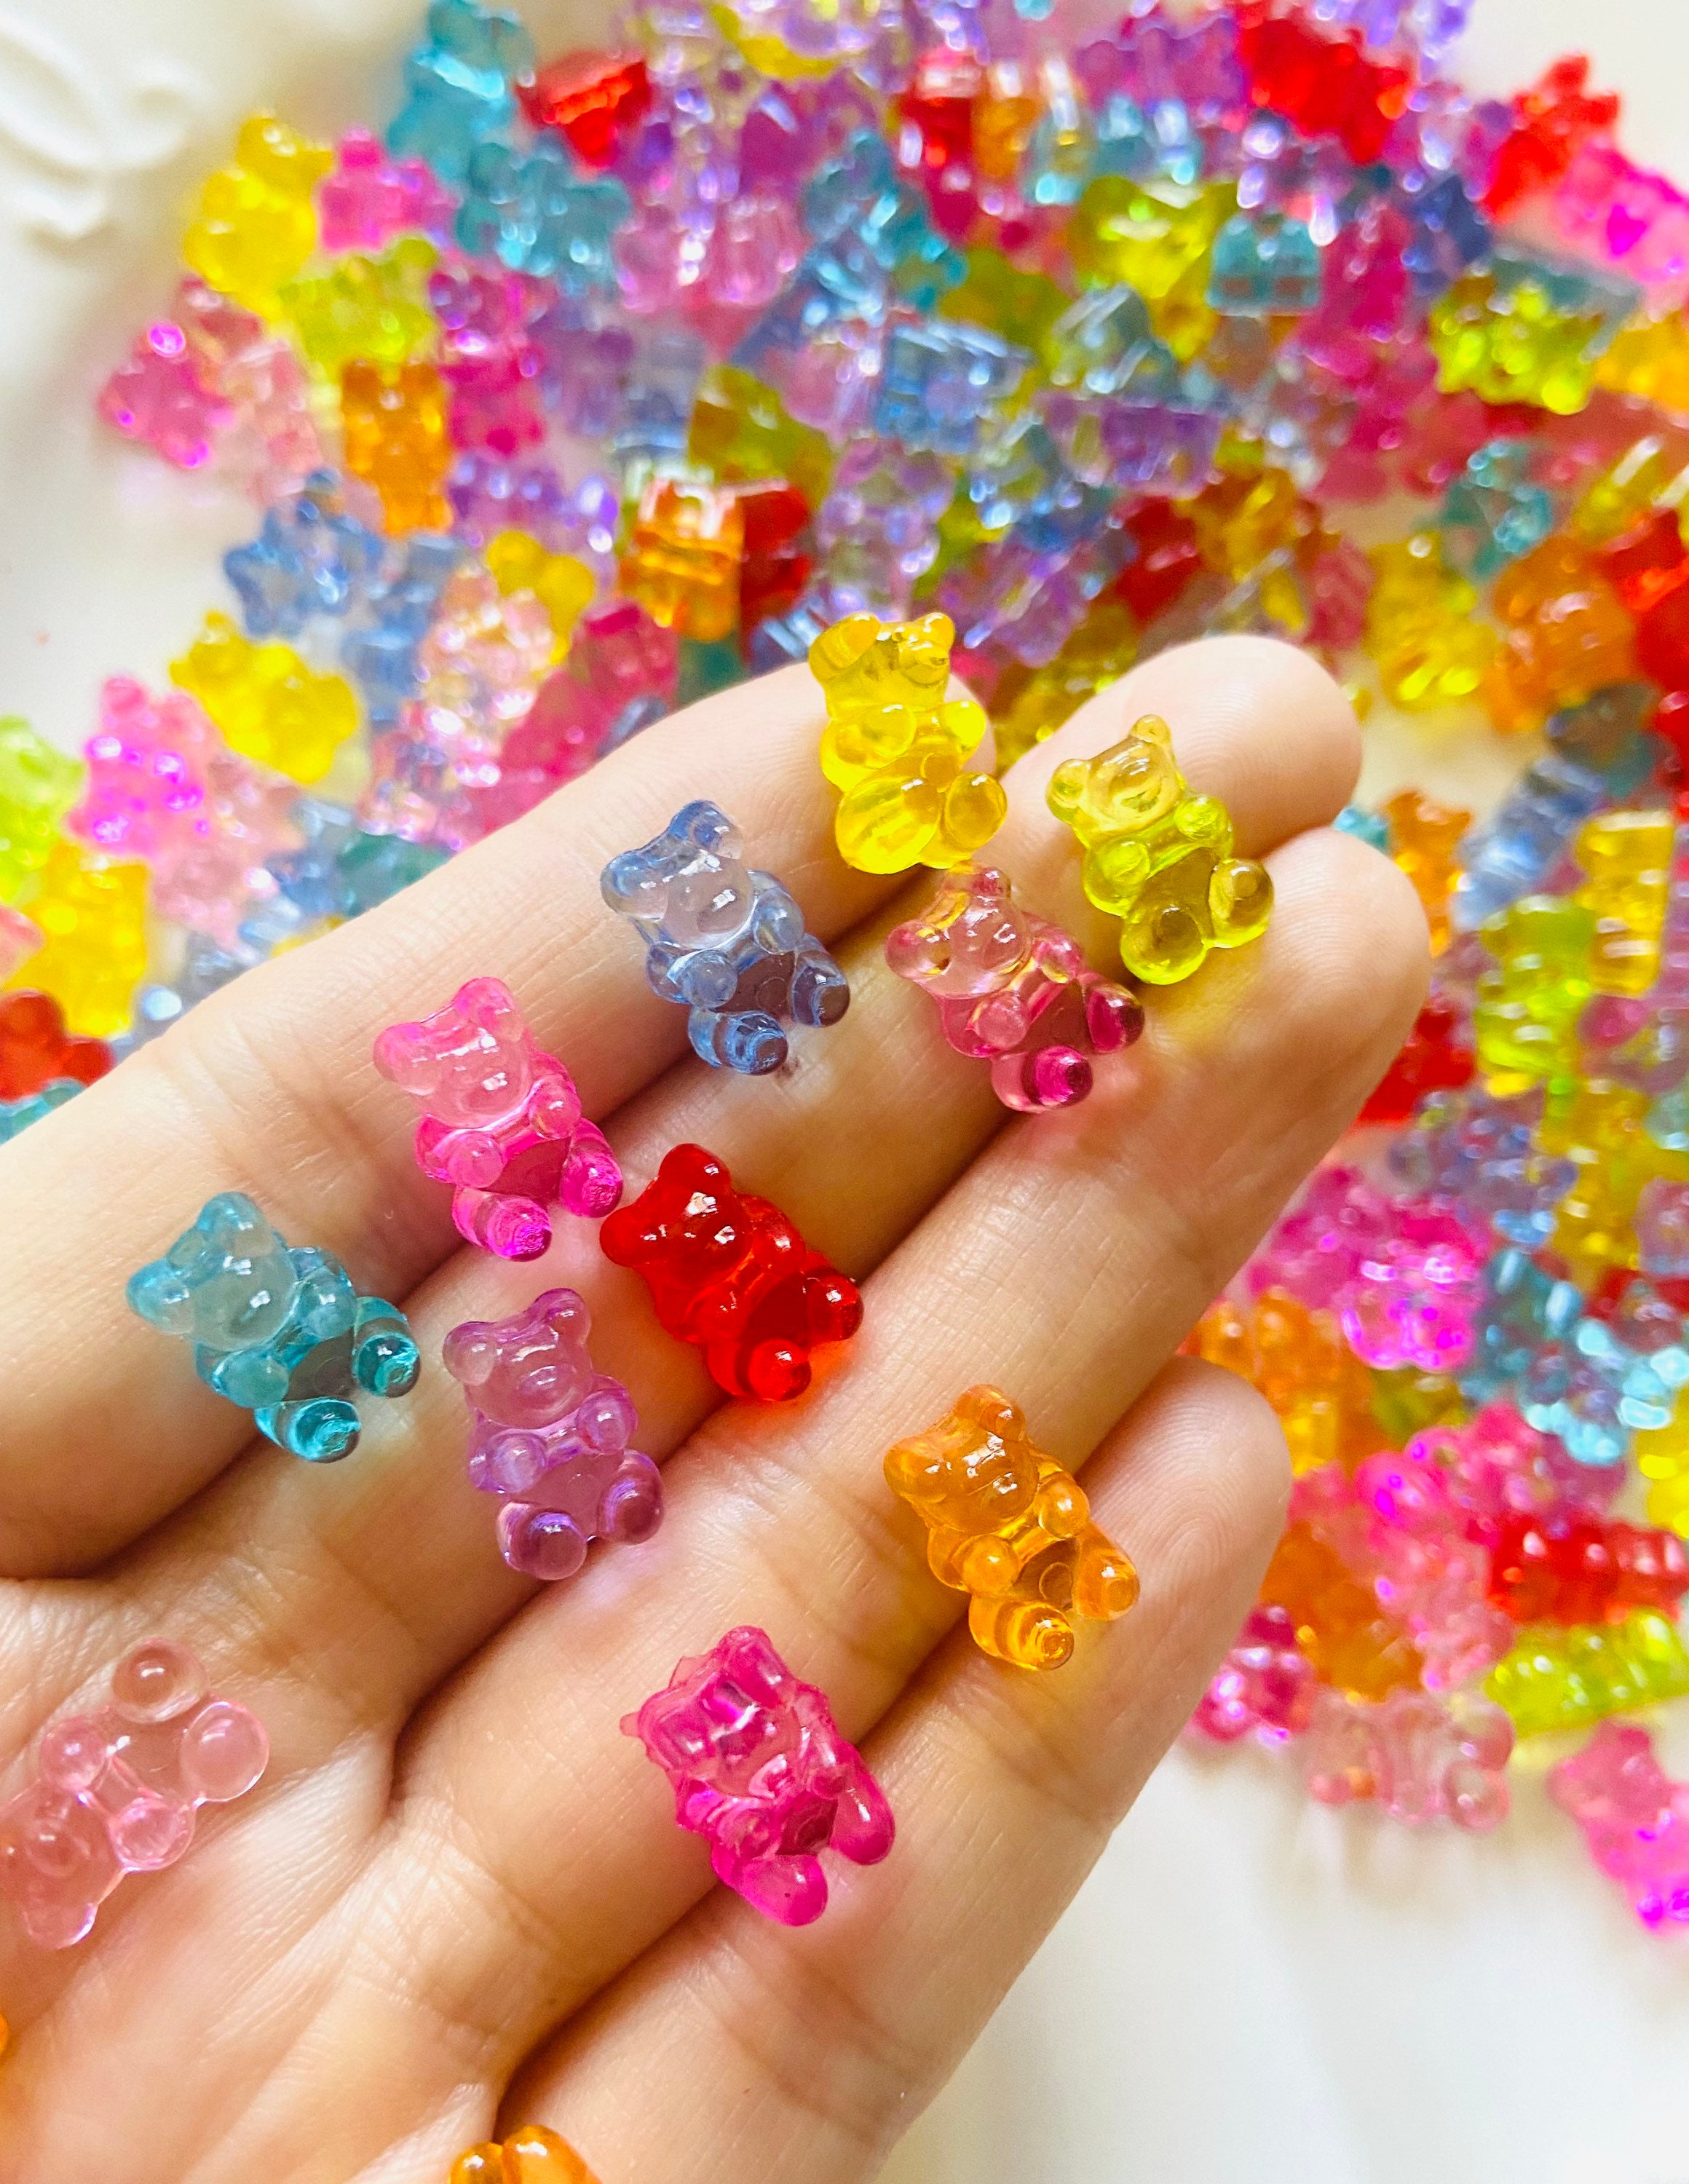 100pcs Bear Nail Beads Gummy 3d Bear Nail Decorations Resin Cute